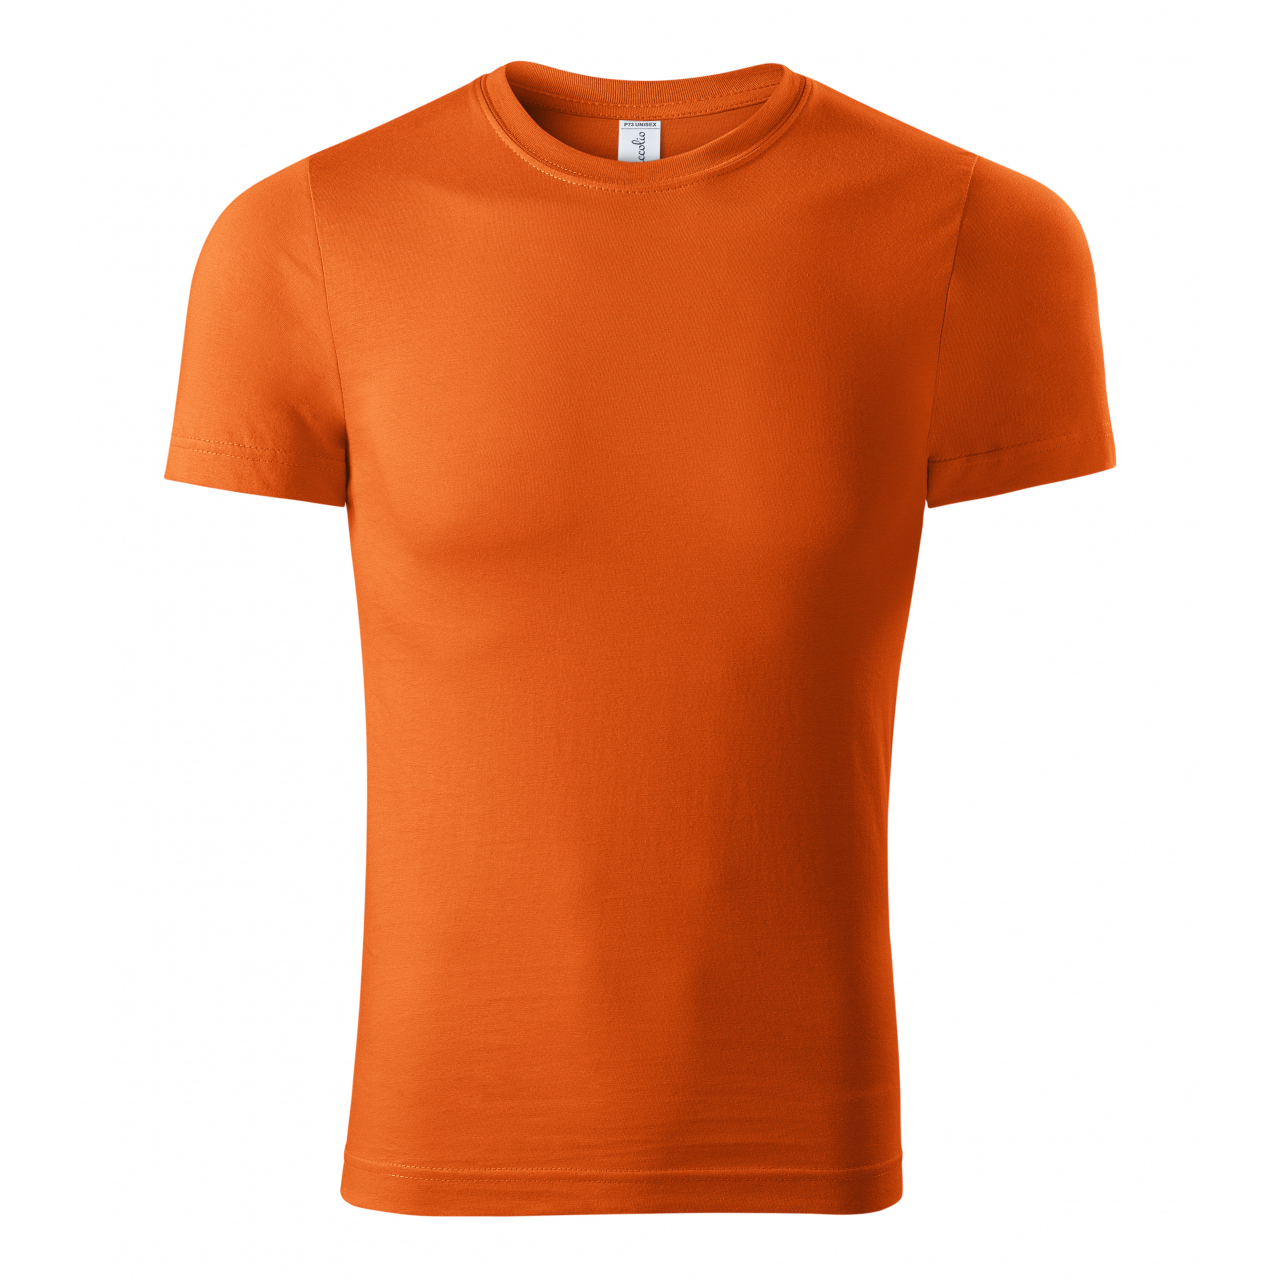 Tričko unisex Piccolio Paint - oranžové, S